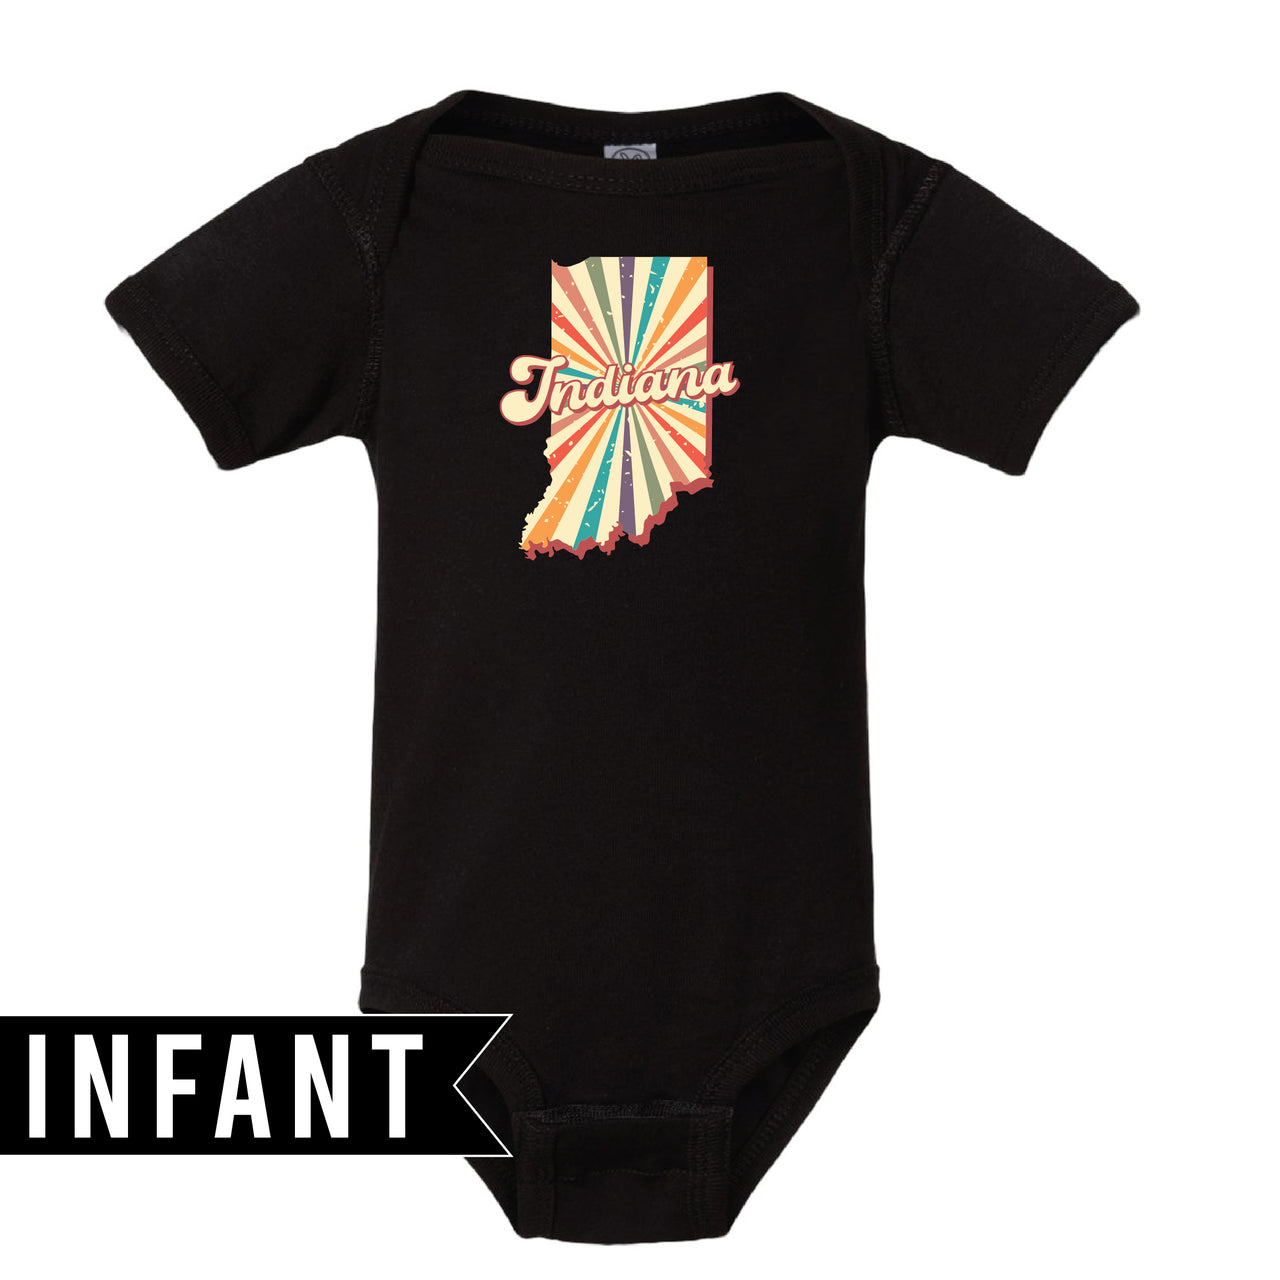 Infant Fine Jersey Bodysuit - Indiana Retro